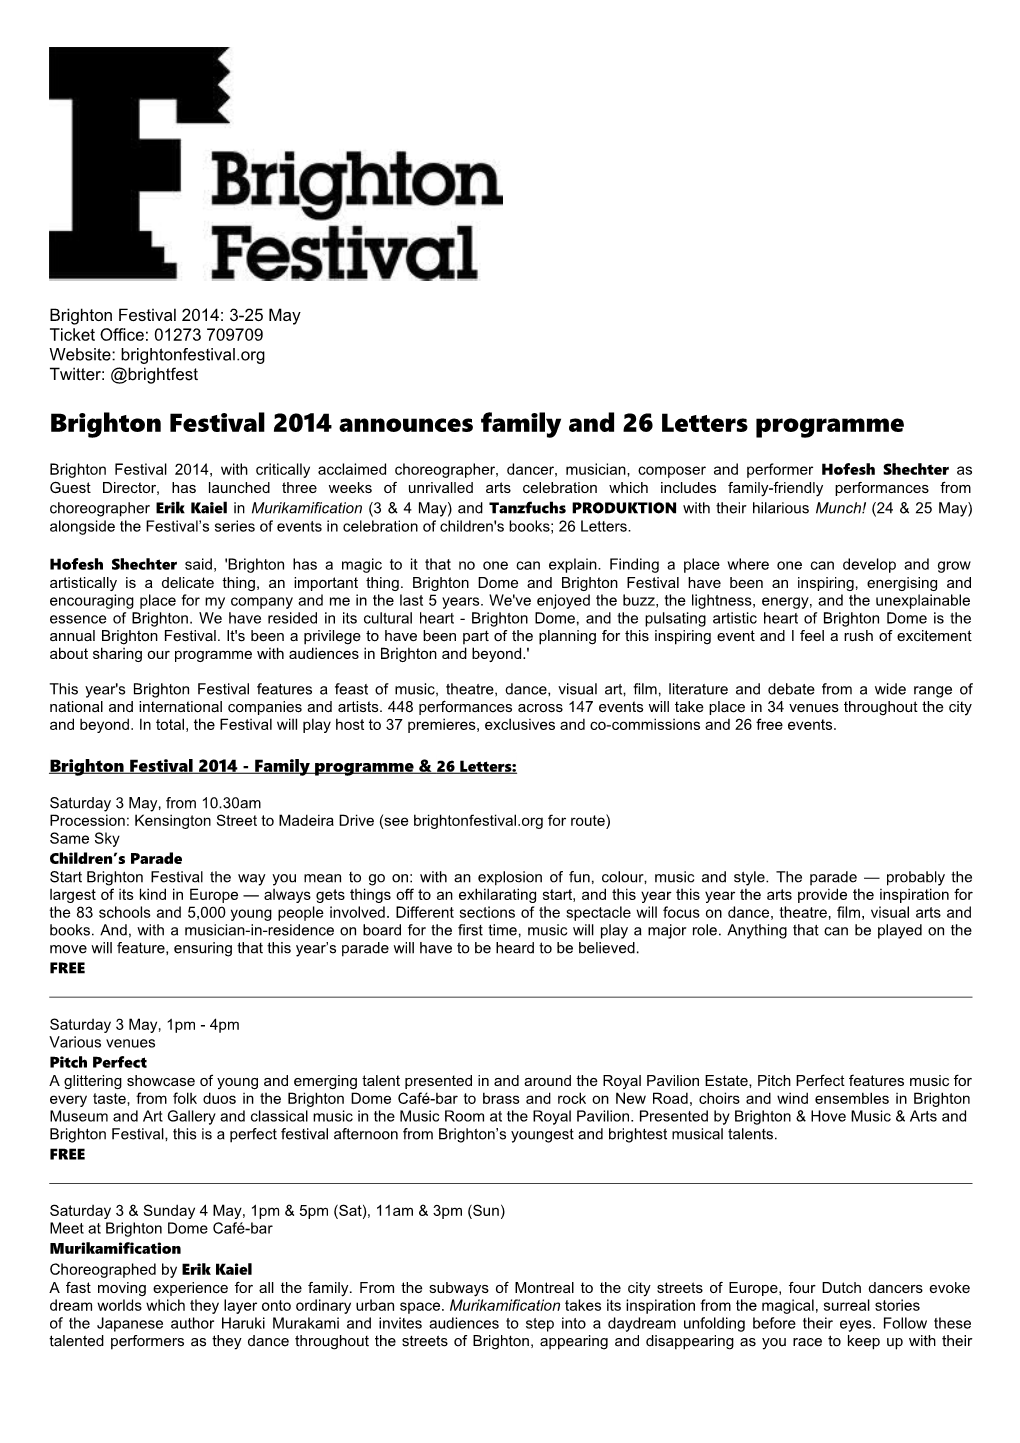 Brighton Festival 2014 - Family Programme26 Letters